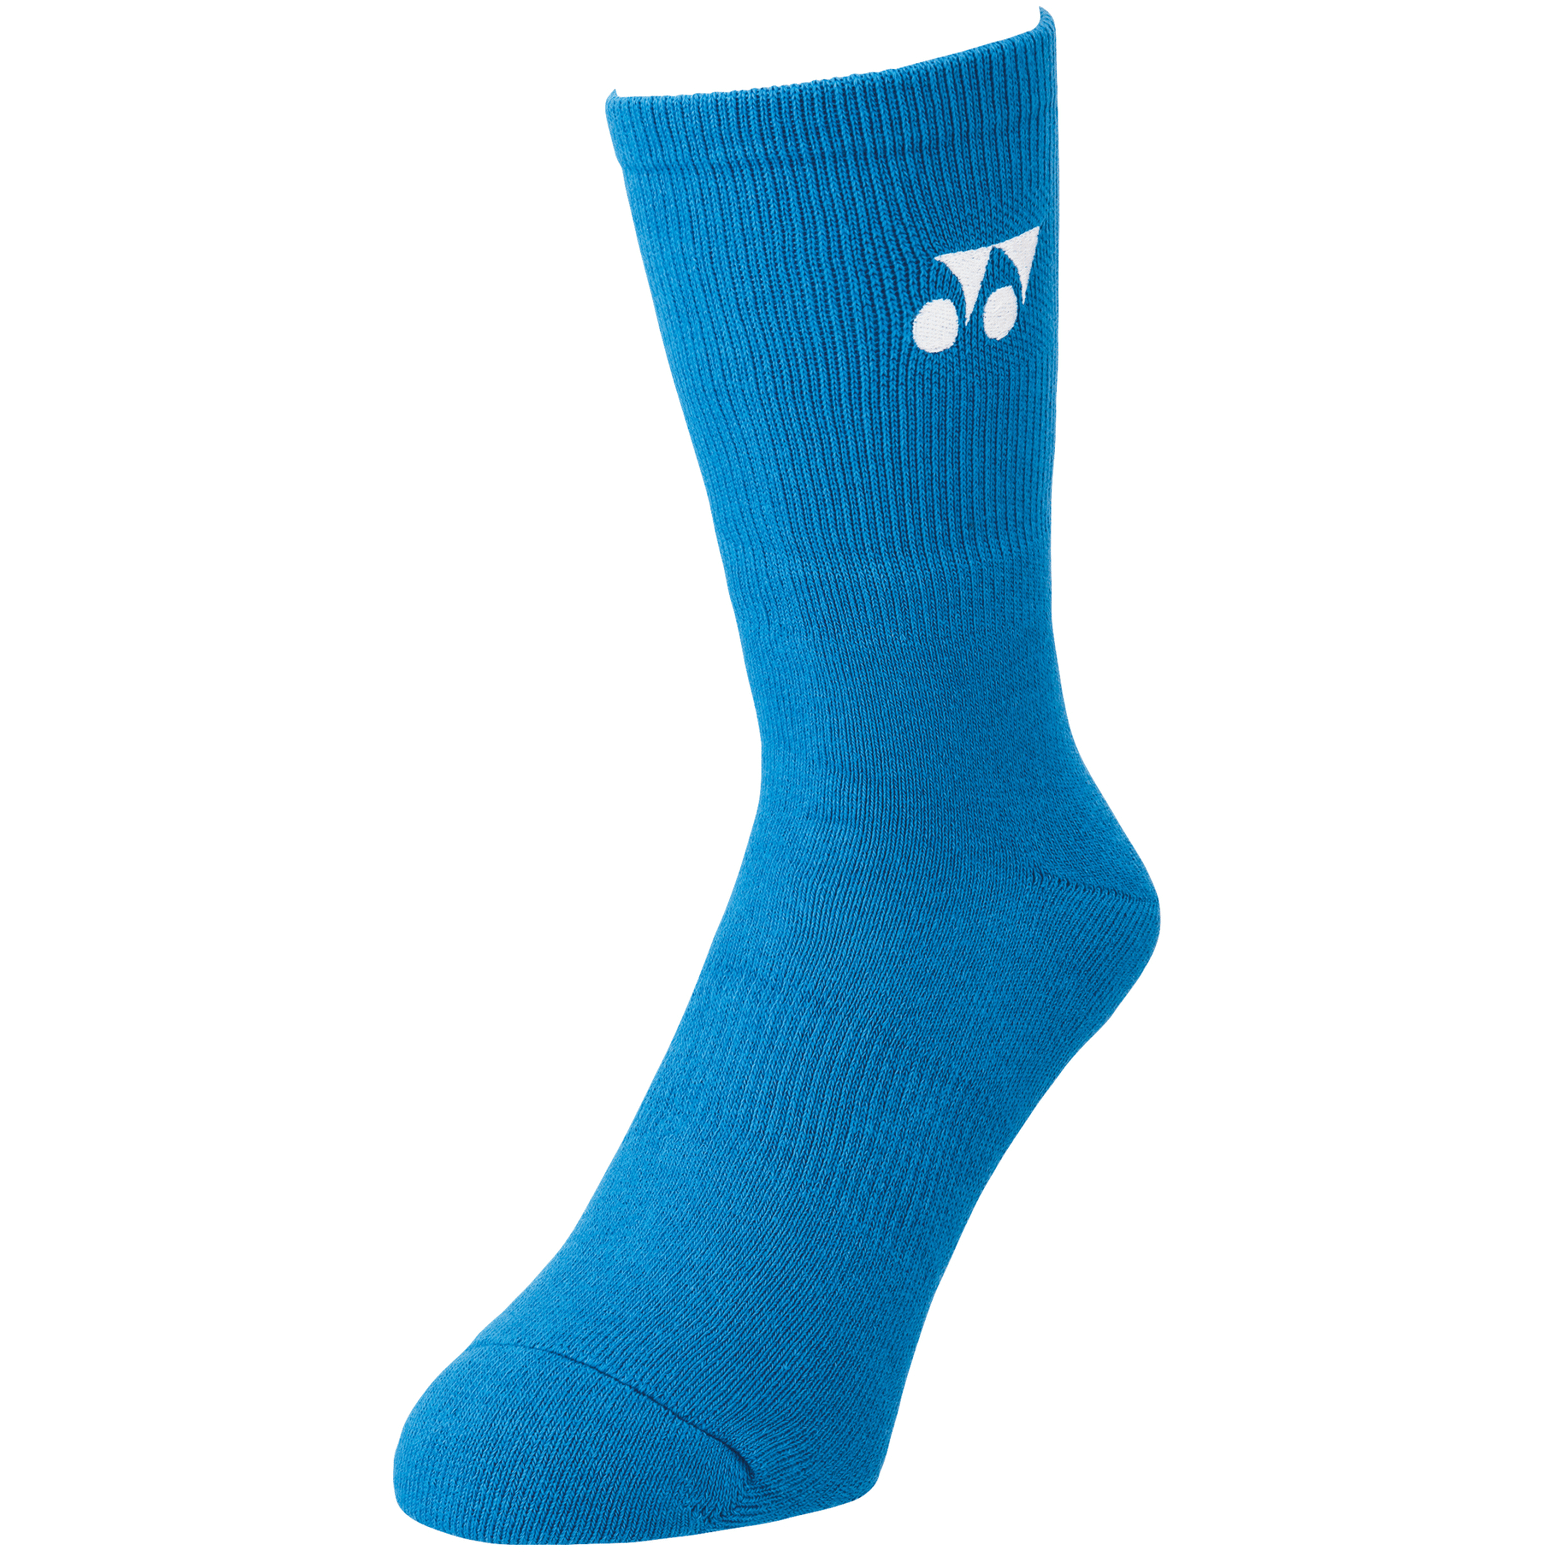 Yonex 19120 Socks - Multiple Colours